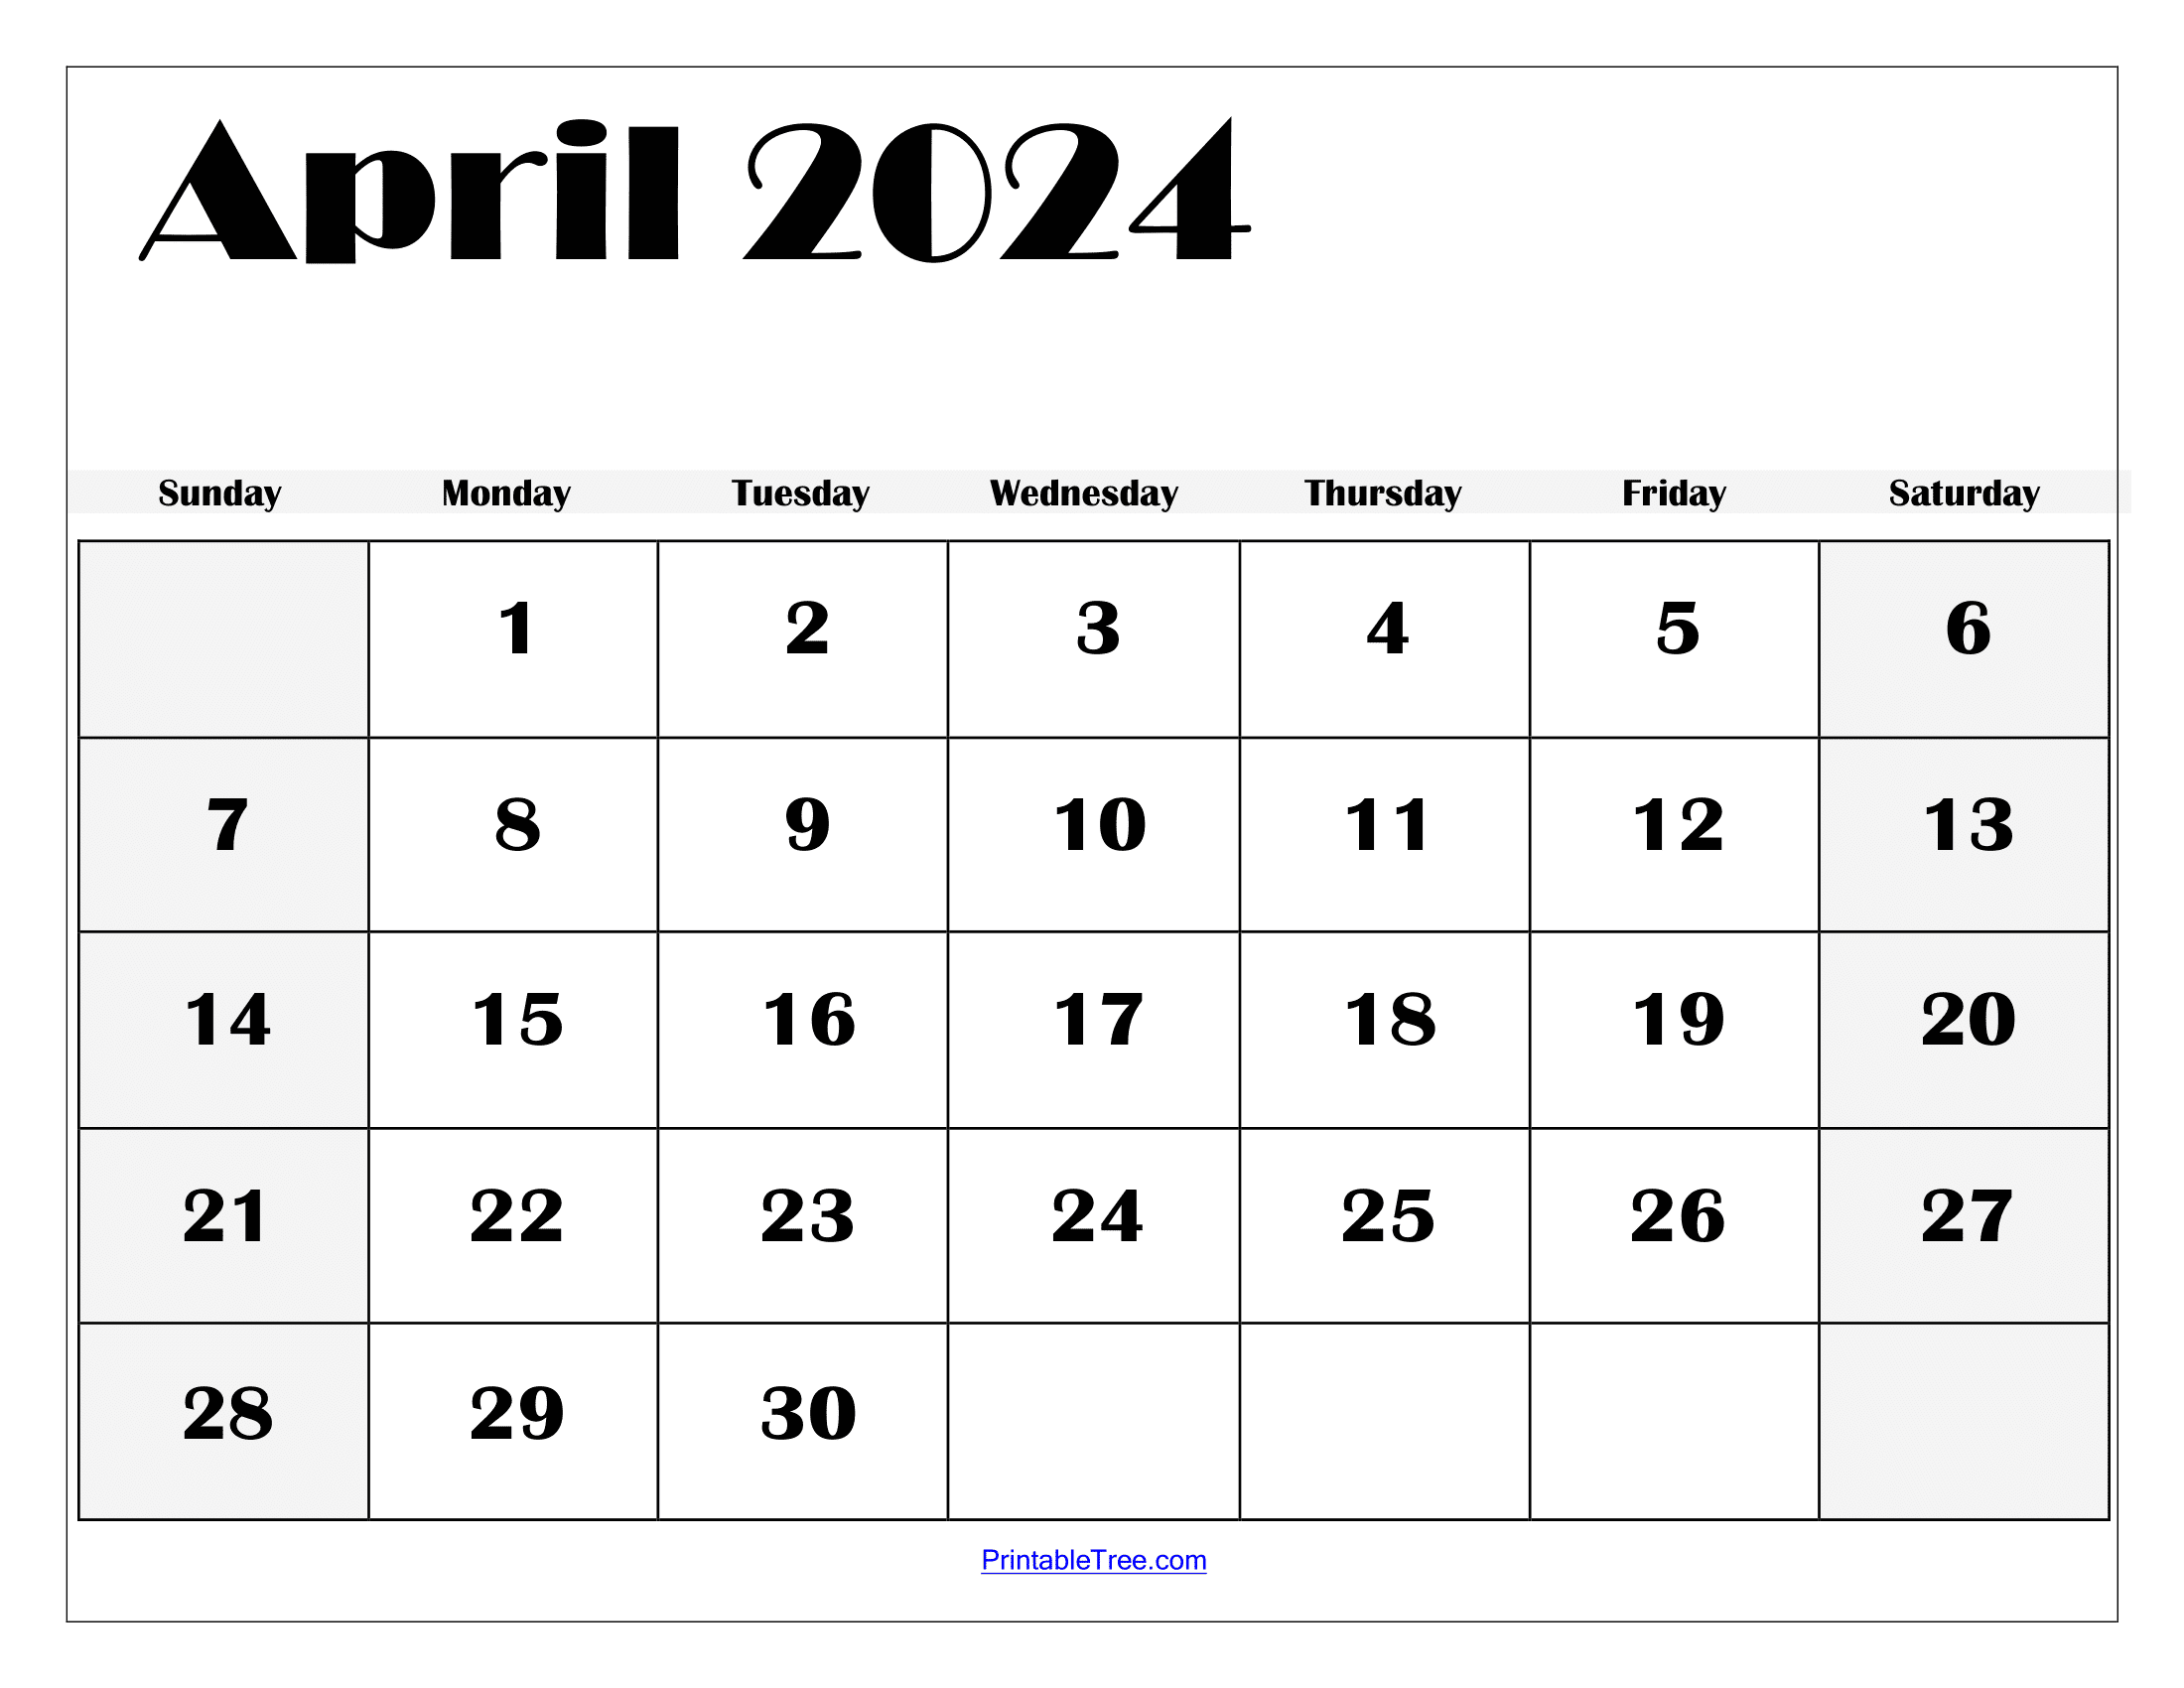 Blank April 2024 Calendar Printable Pdf Template With Holidays for April 2024 Blank Printable Calendar